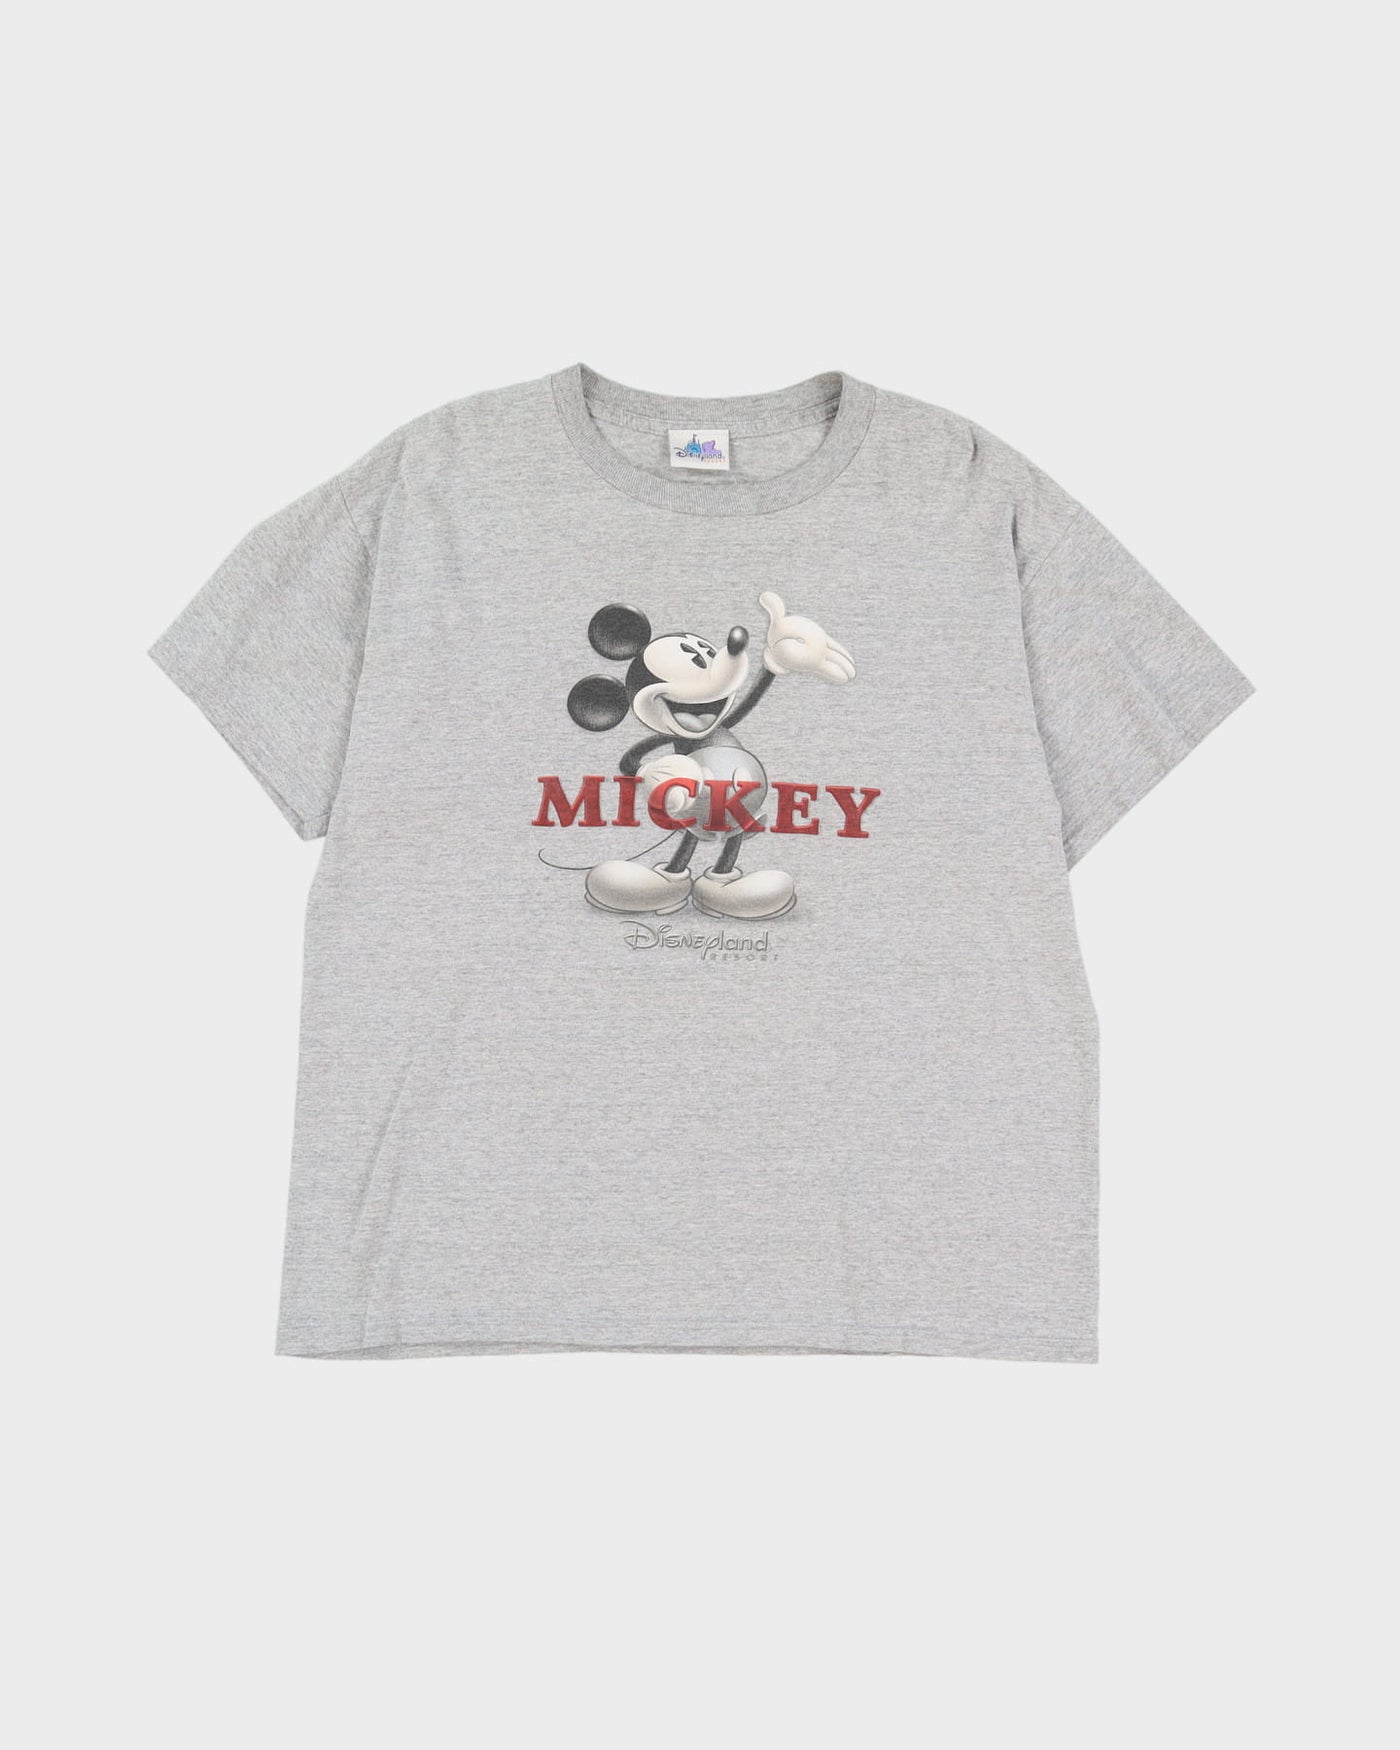 00s Mickey Mouse Disneyland Resort Graphic T-Shirt - L